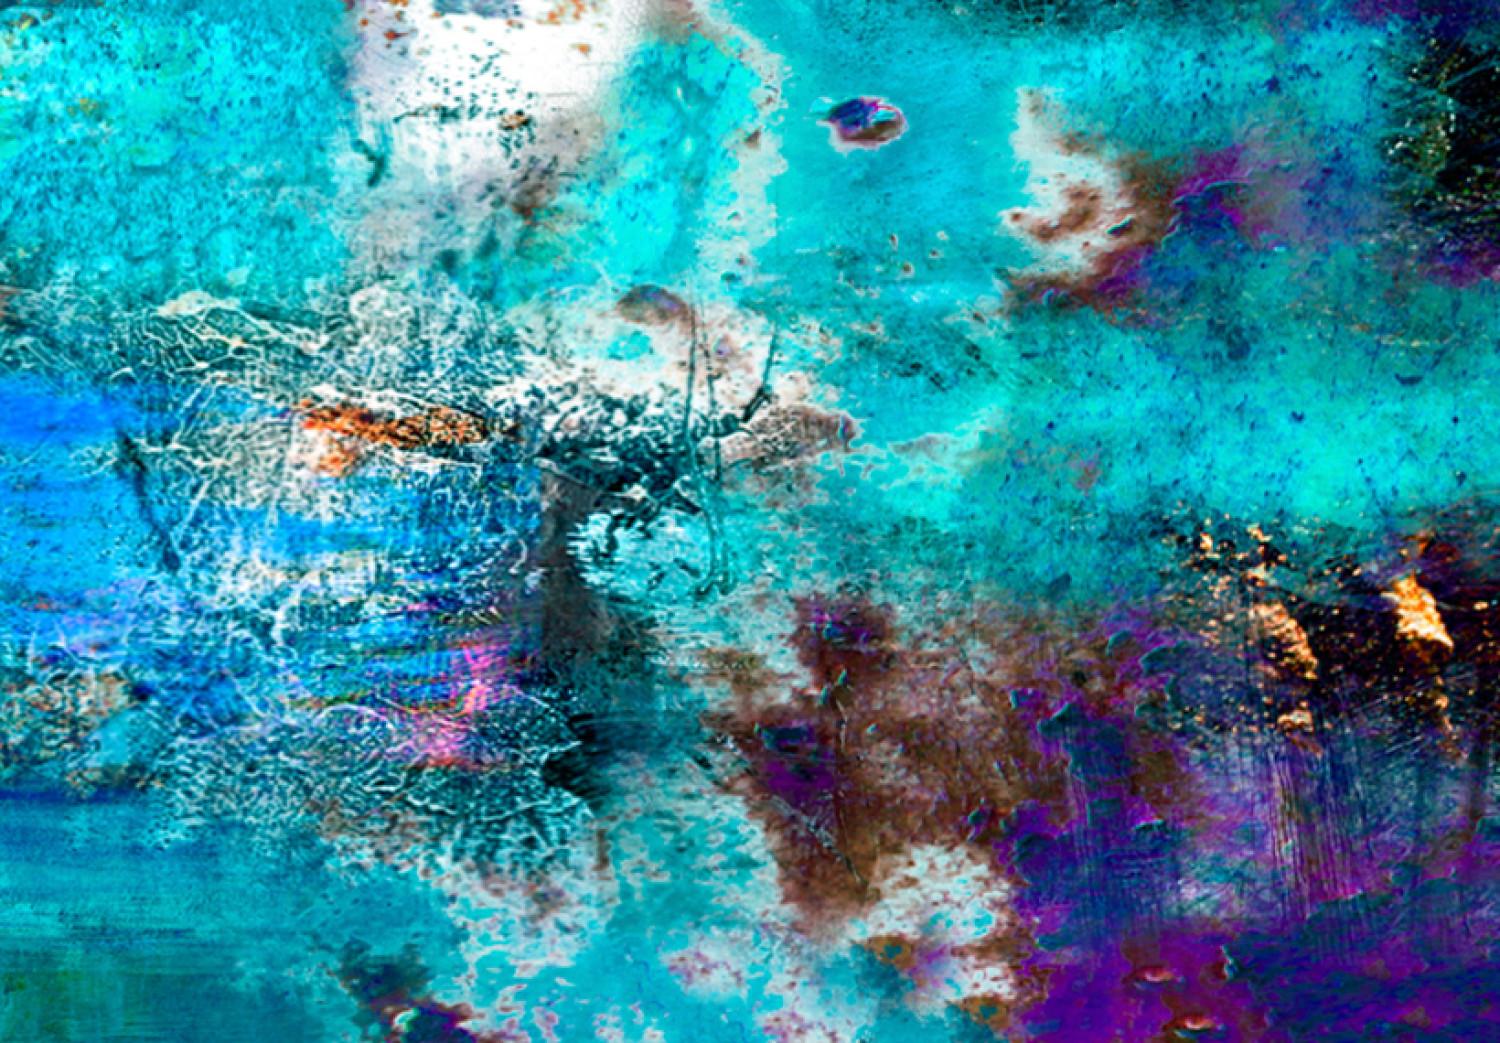 Cuadro decorativo Abstract Ocean